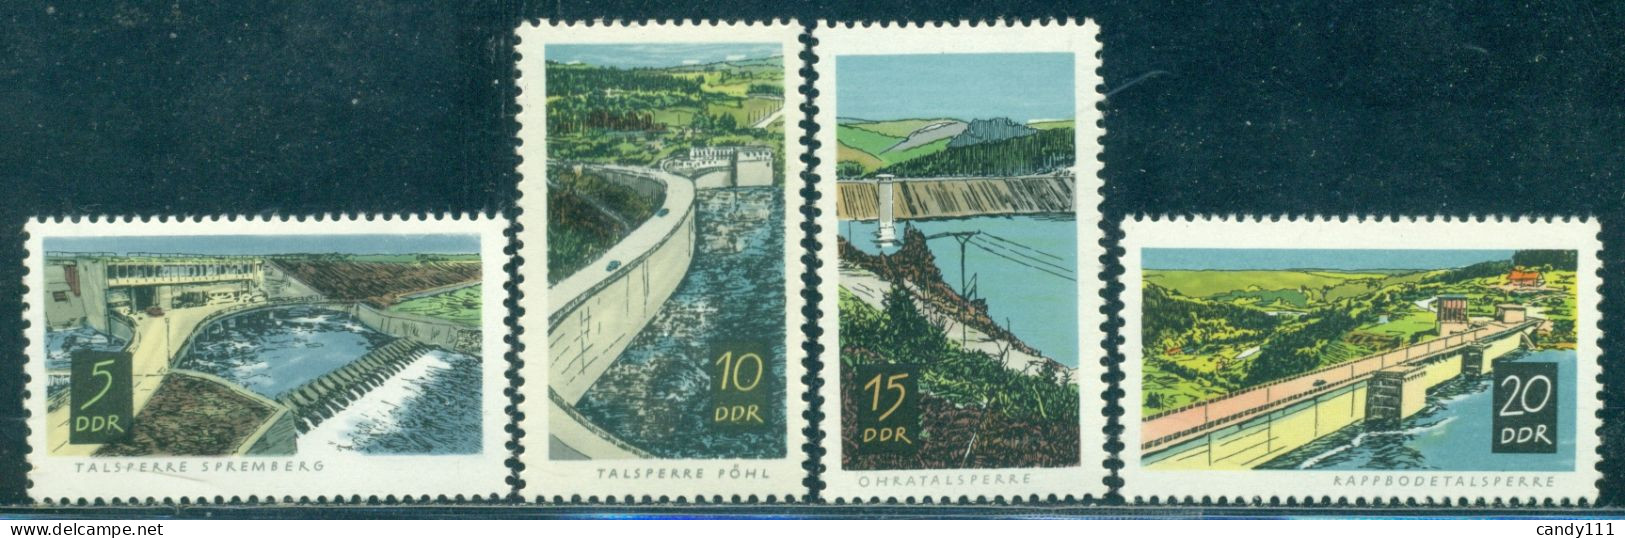 1968 Dam,Ohratalsperre,Ohratalsperre,drinking Water,DDR,1400,MNH - Water